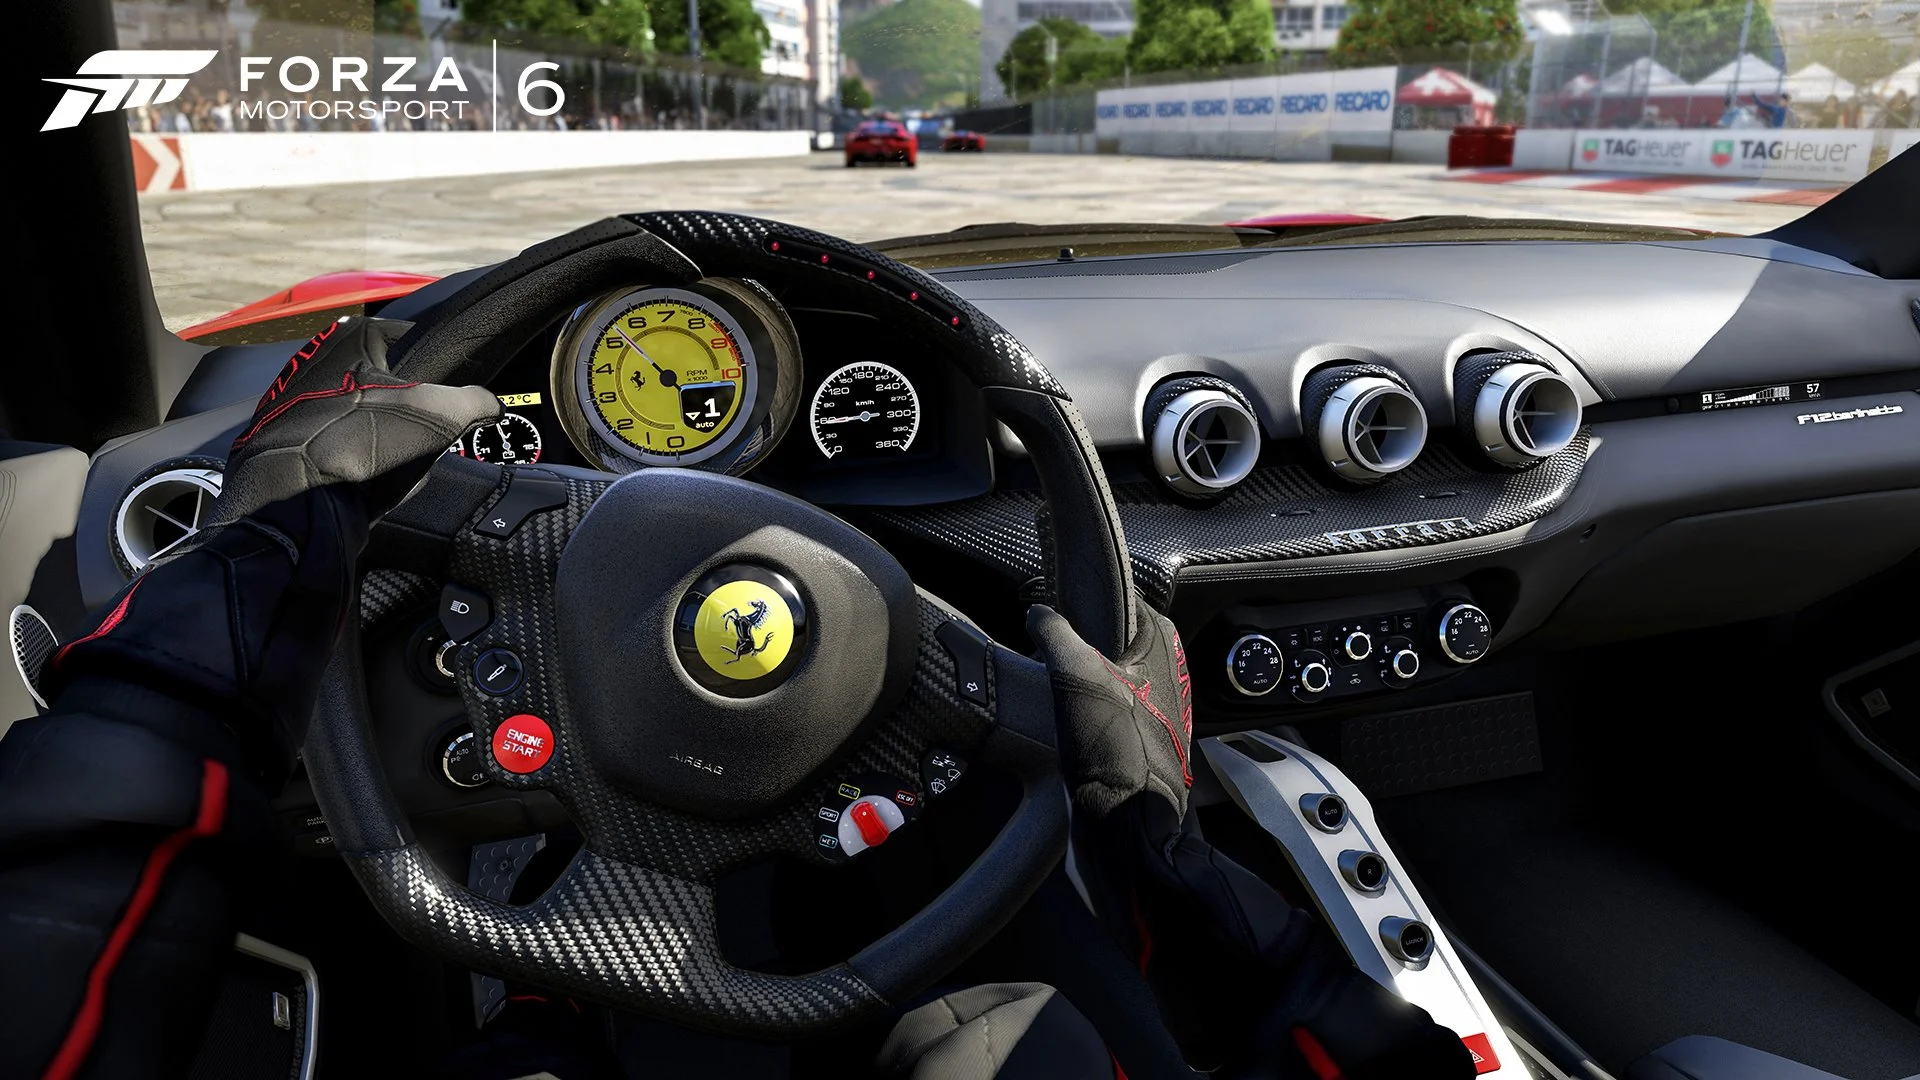 Главная причина для покупки Forza Motorsport 6 — вибрация джойстика  - фото 3